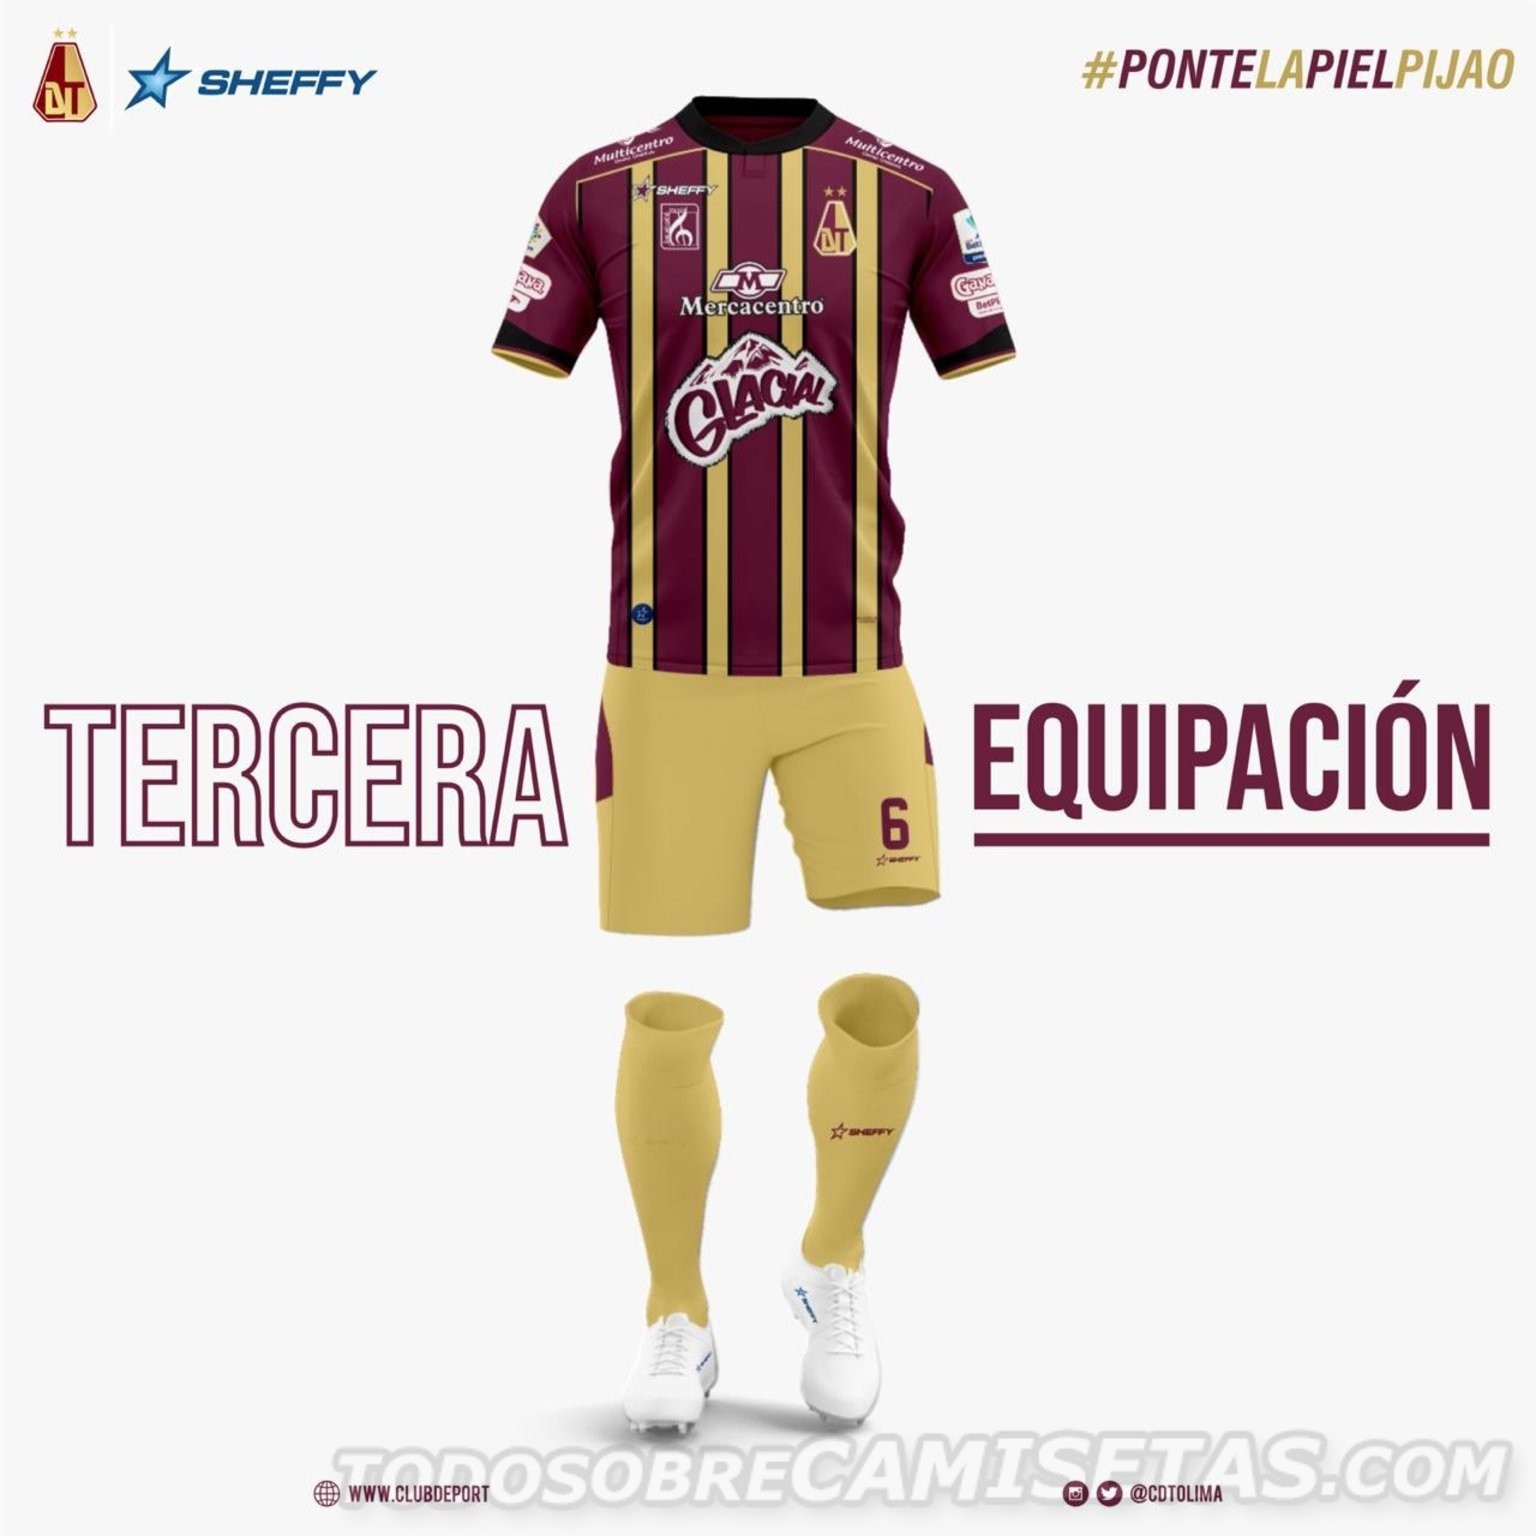 Camisetas Sheffy de Deportes Tolima 2020